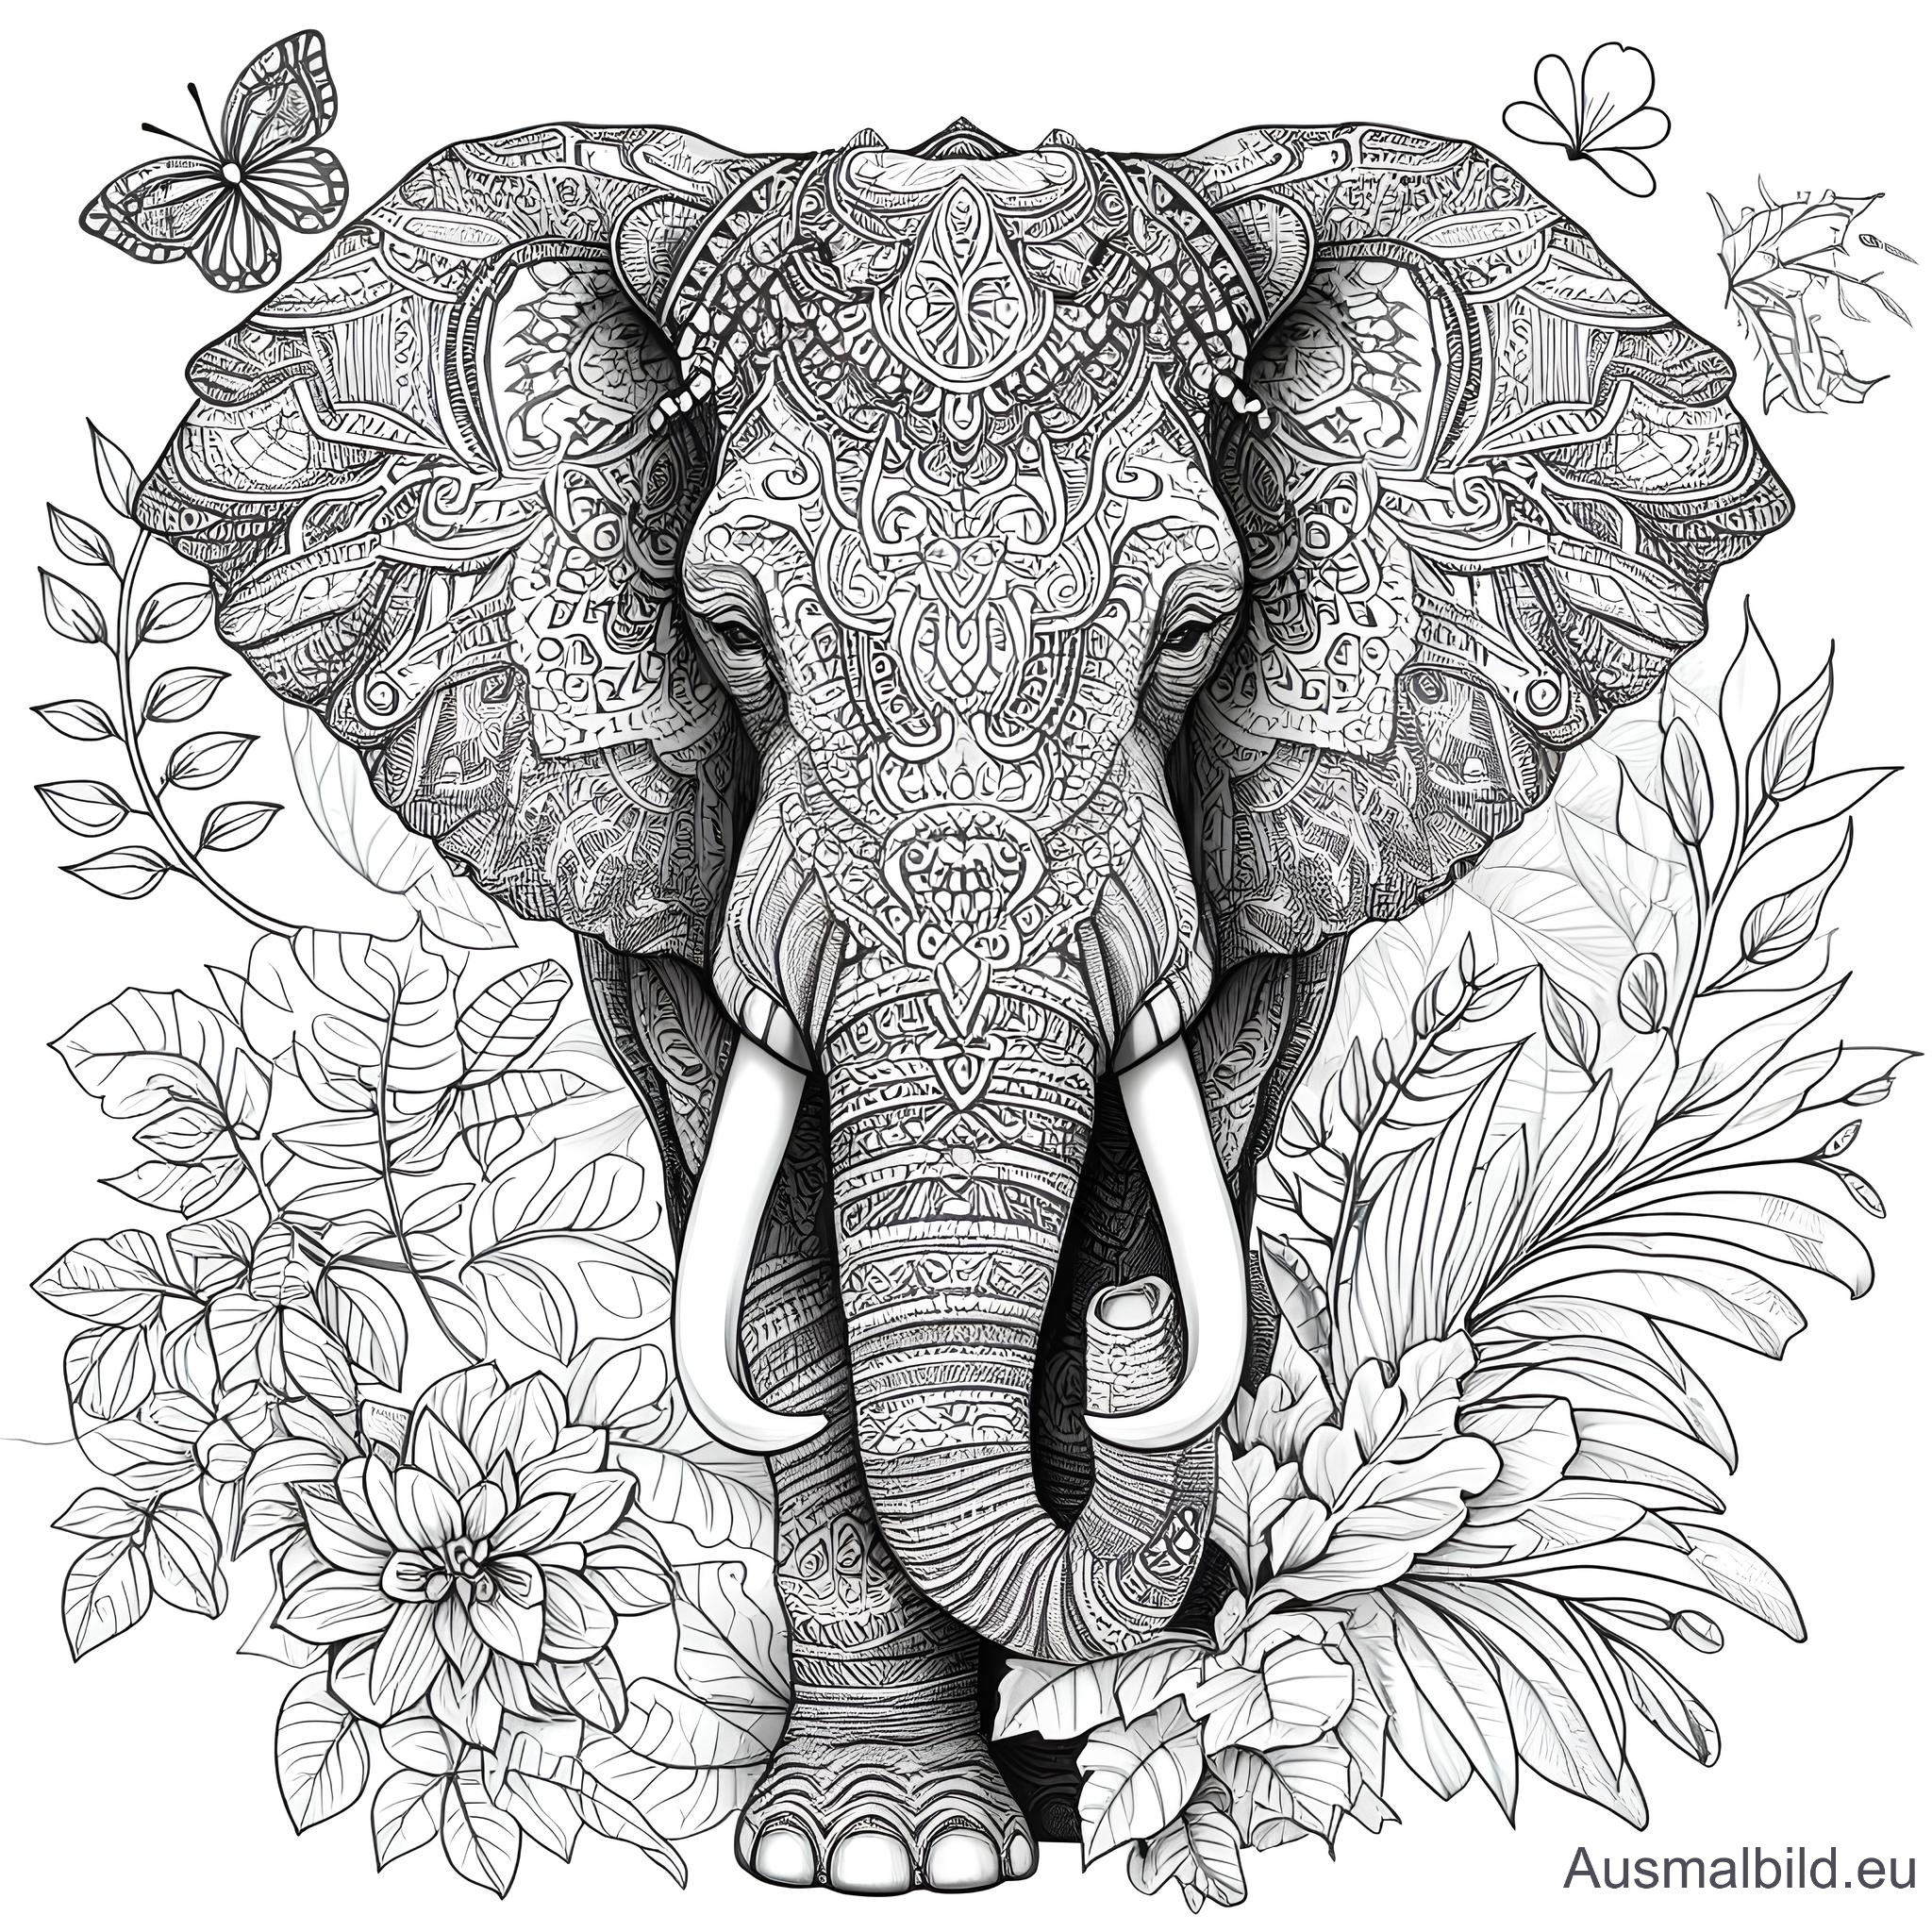 Ausmalbild - Elefant Mandala 2